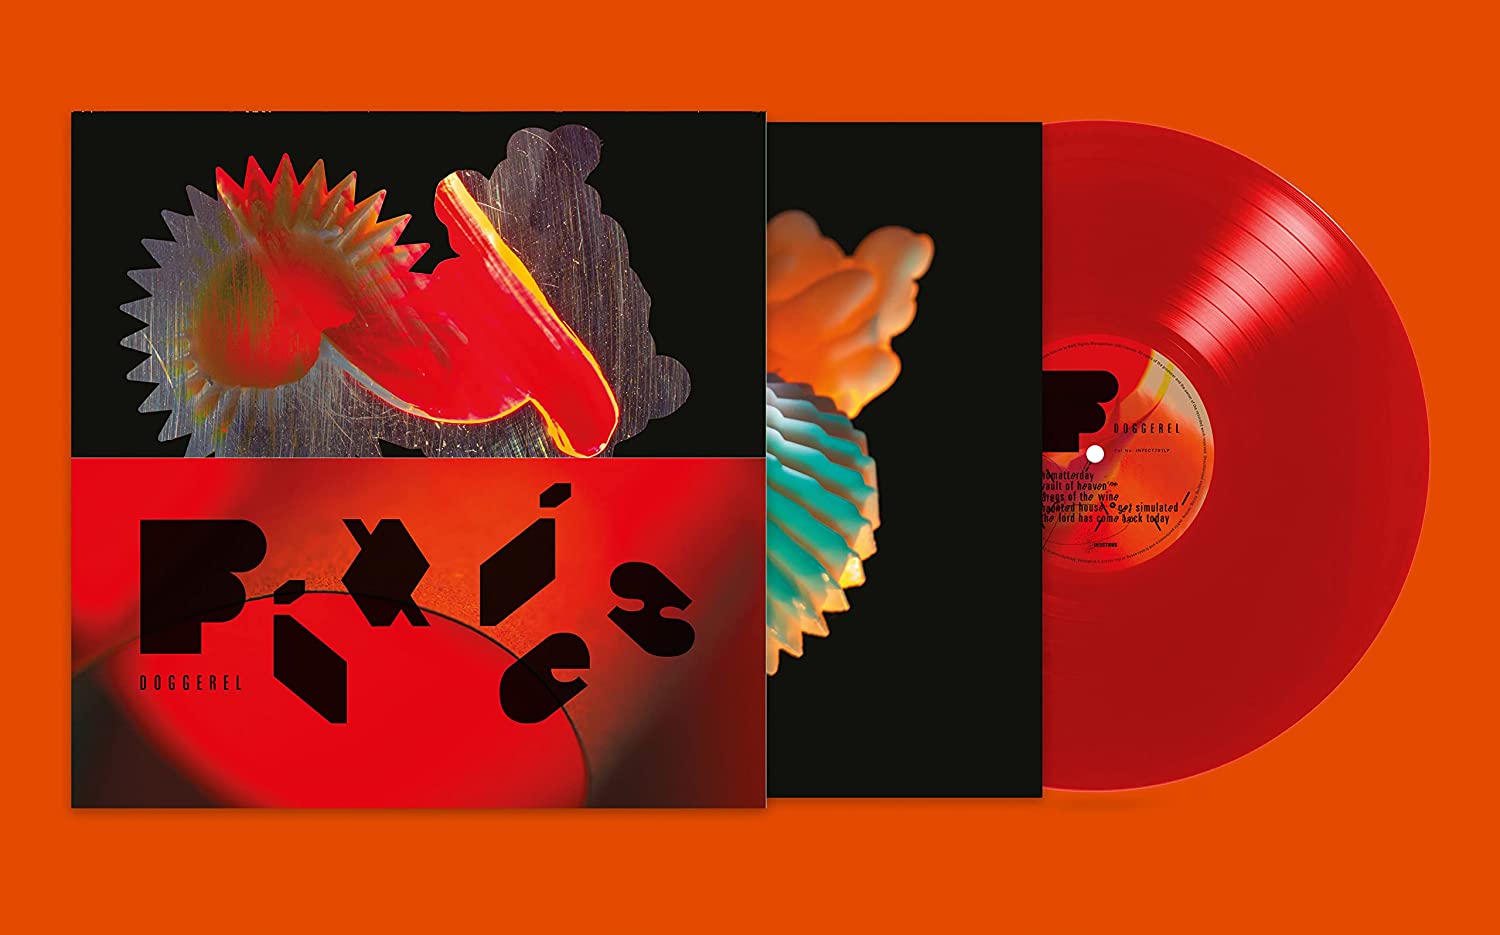 Pixies Doggerel Limited Red Vinyl LP